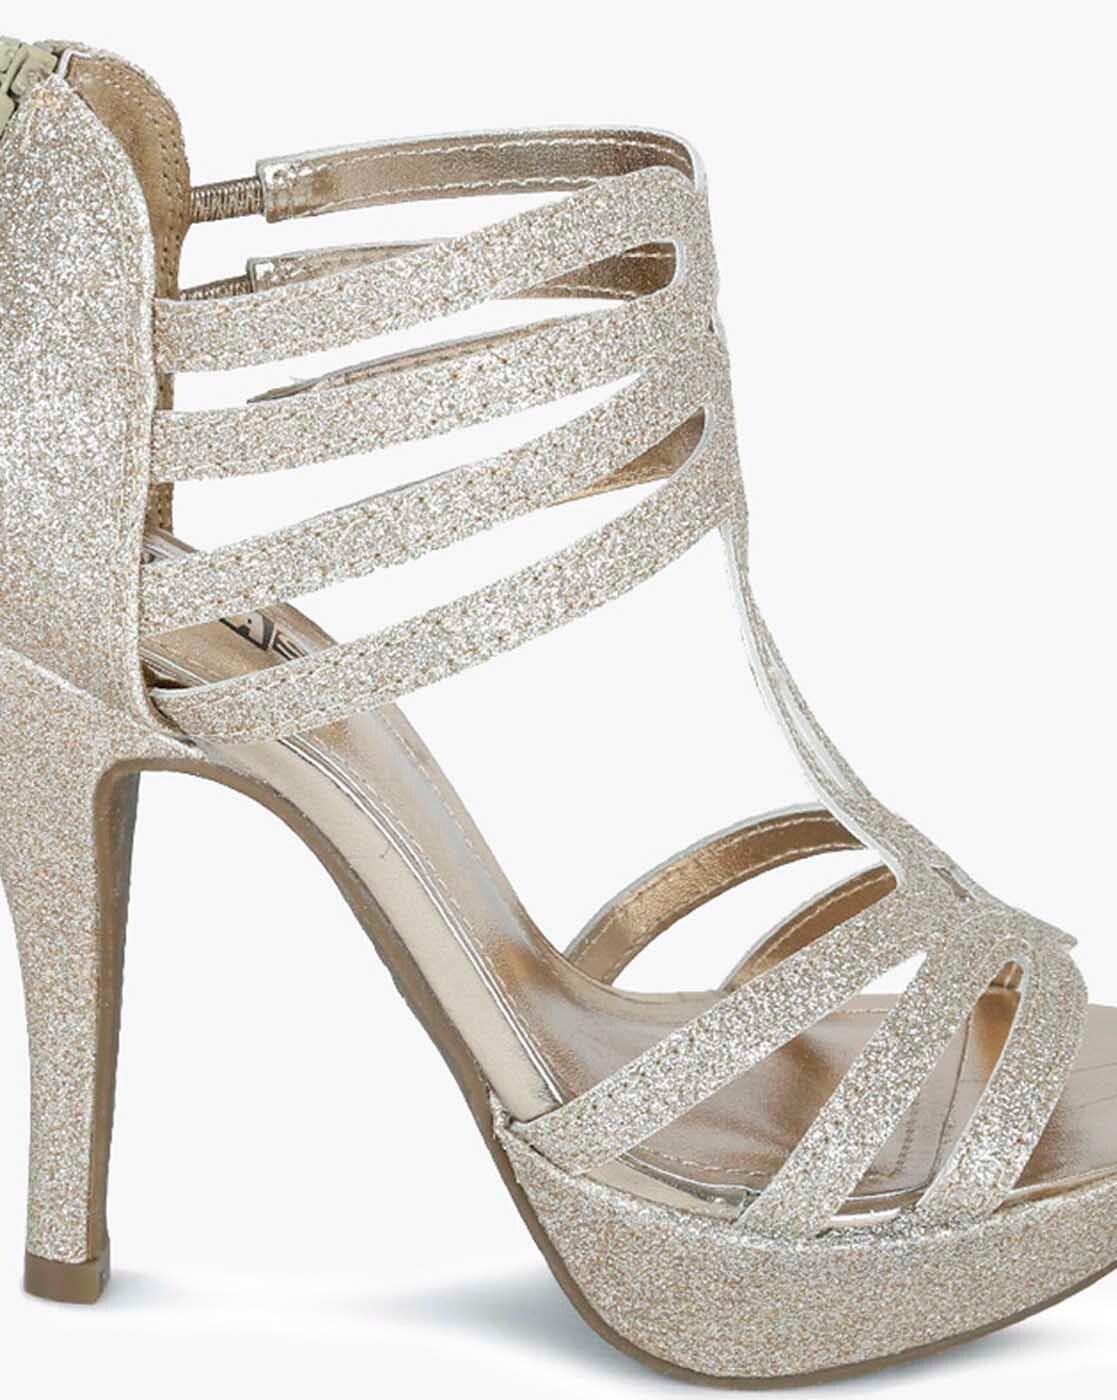 Brash Silver Metallic Slip On Platform Heels Sandals Women Size 7.5  Espadrilles